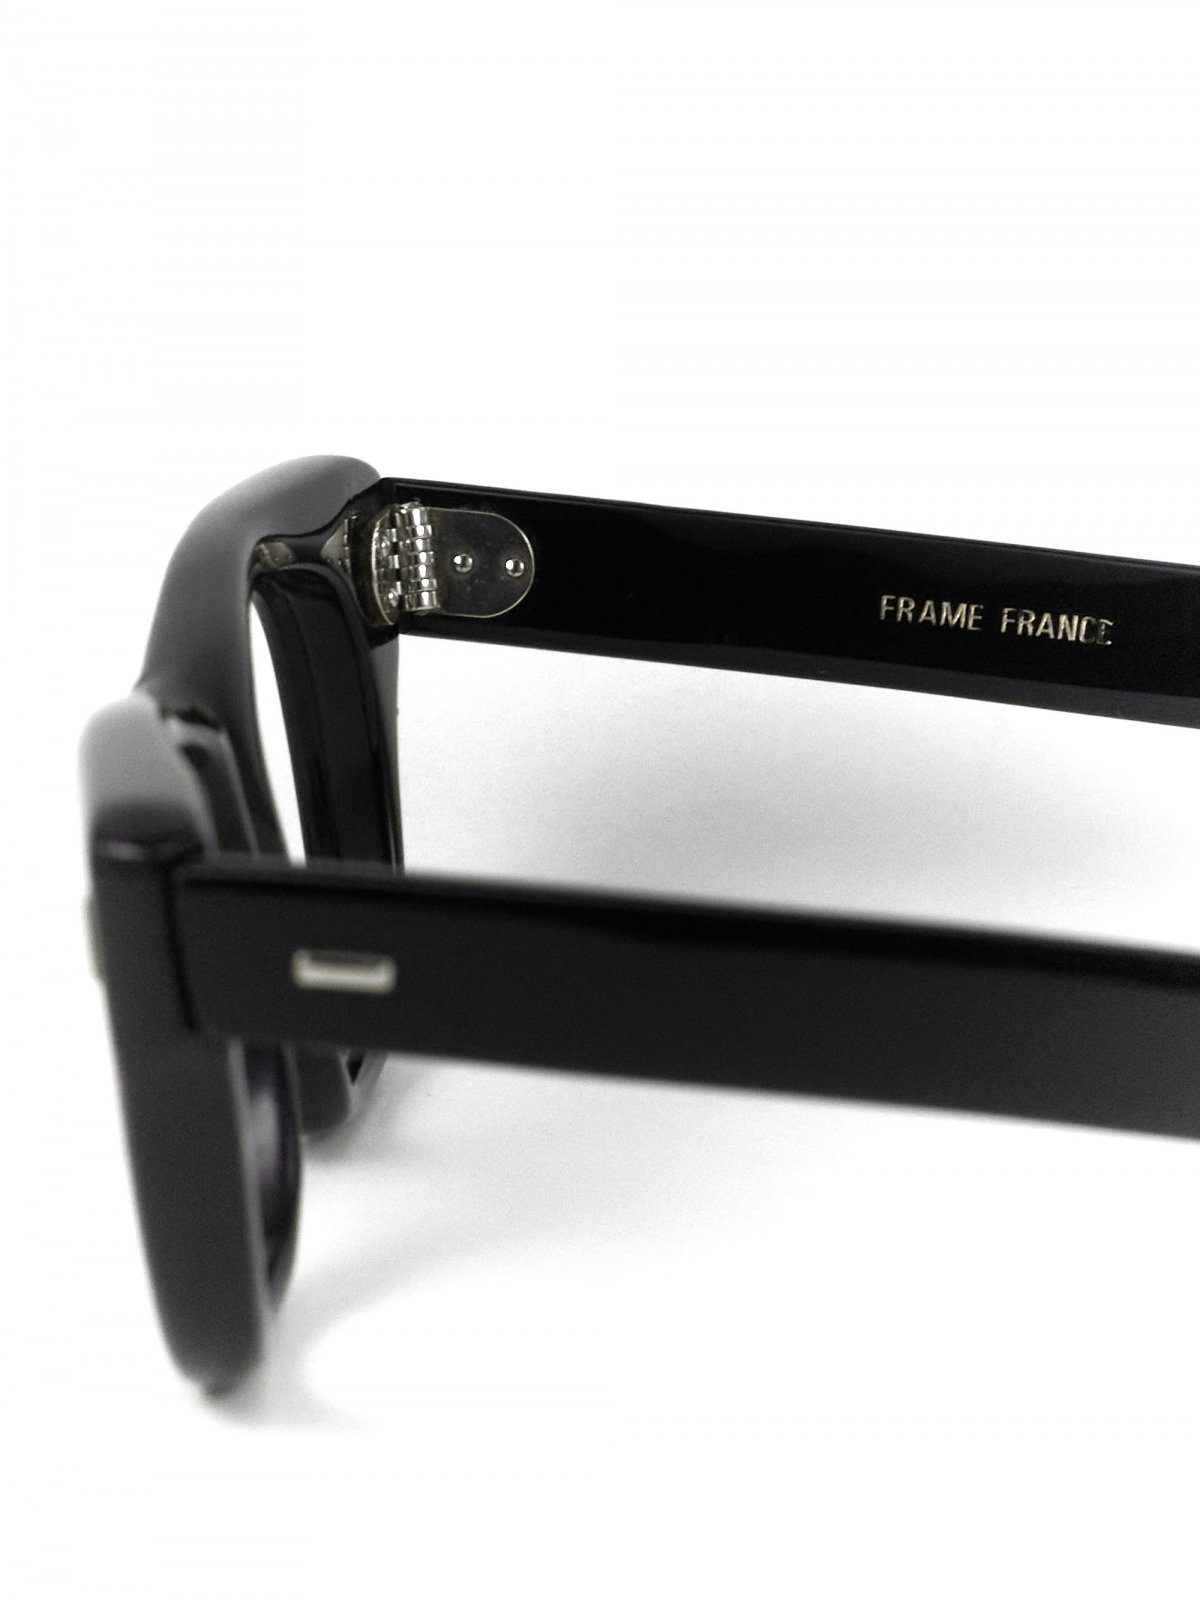 1960s FRANCE VINTAGE EYEGLASS BLACK - OPT-751 ビンテージ眼鏡 